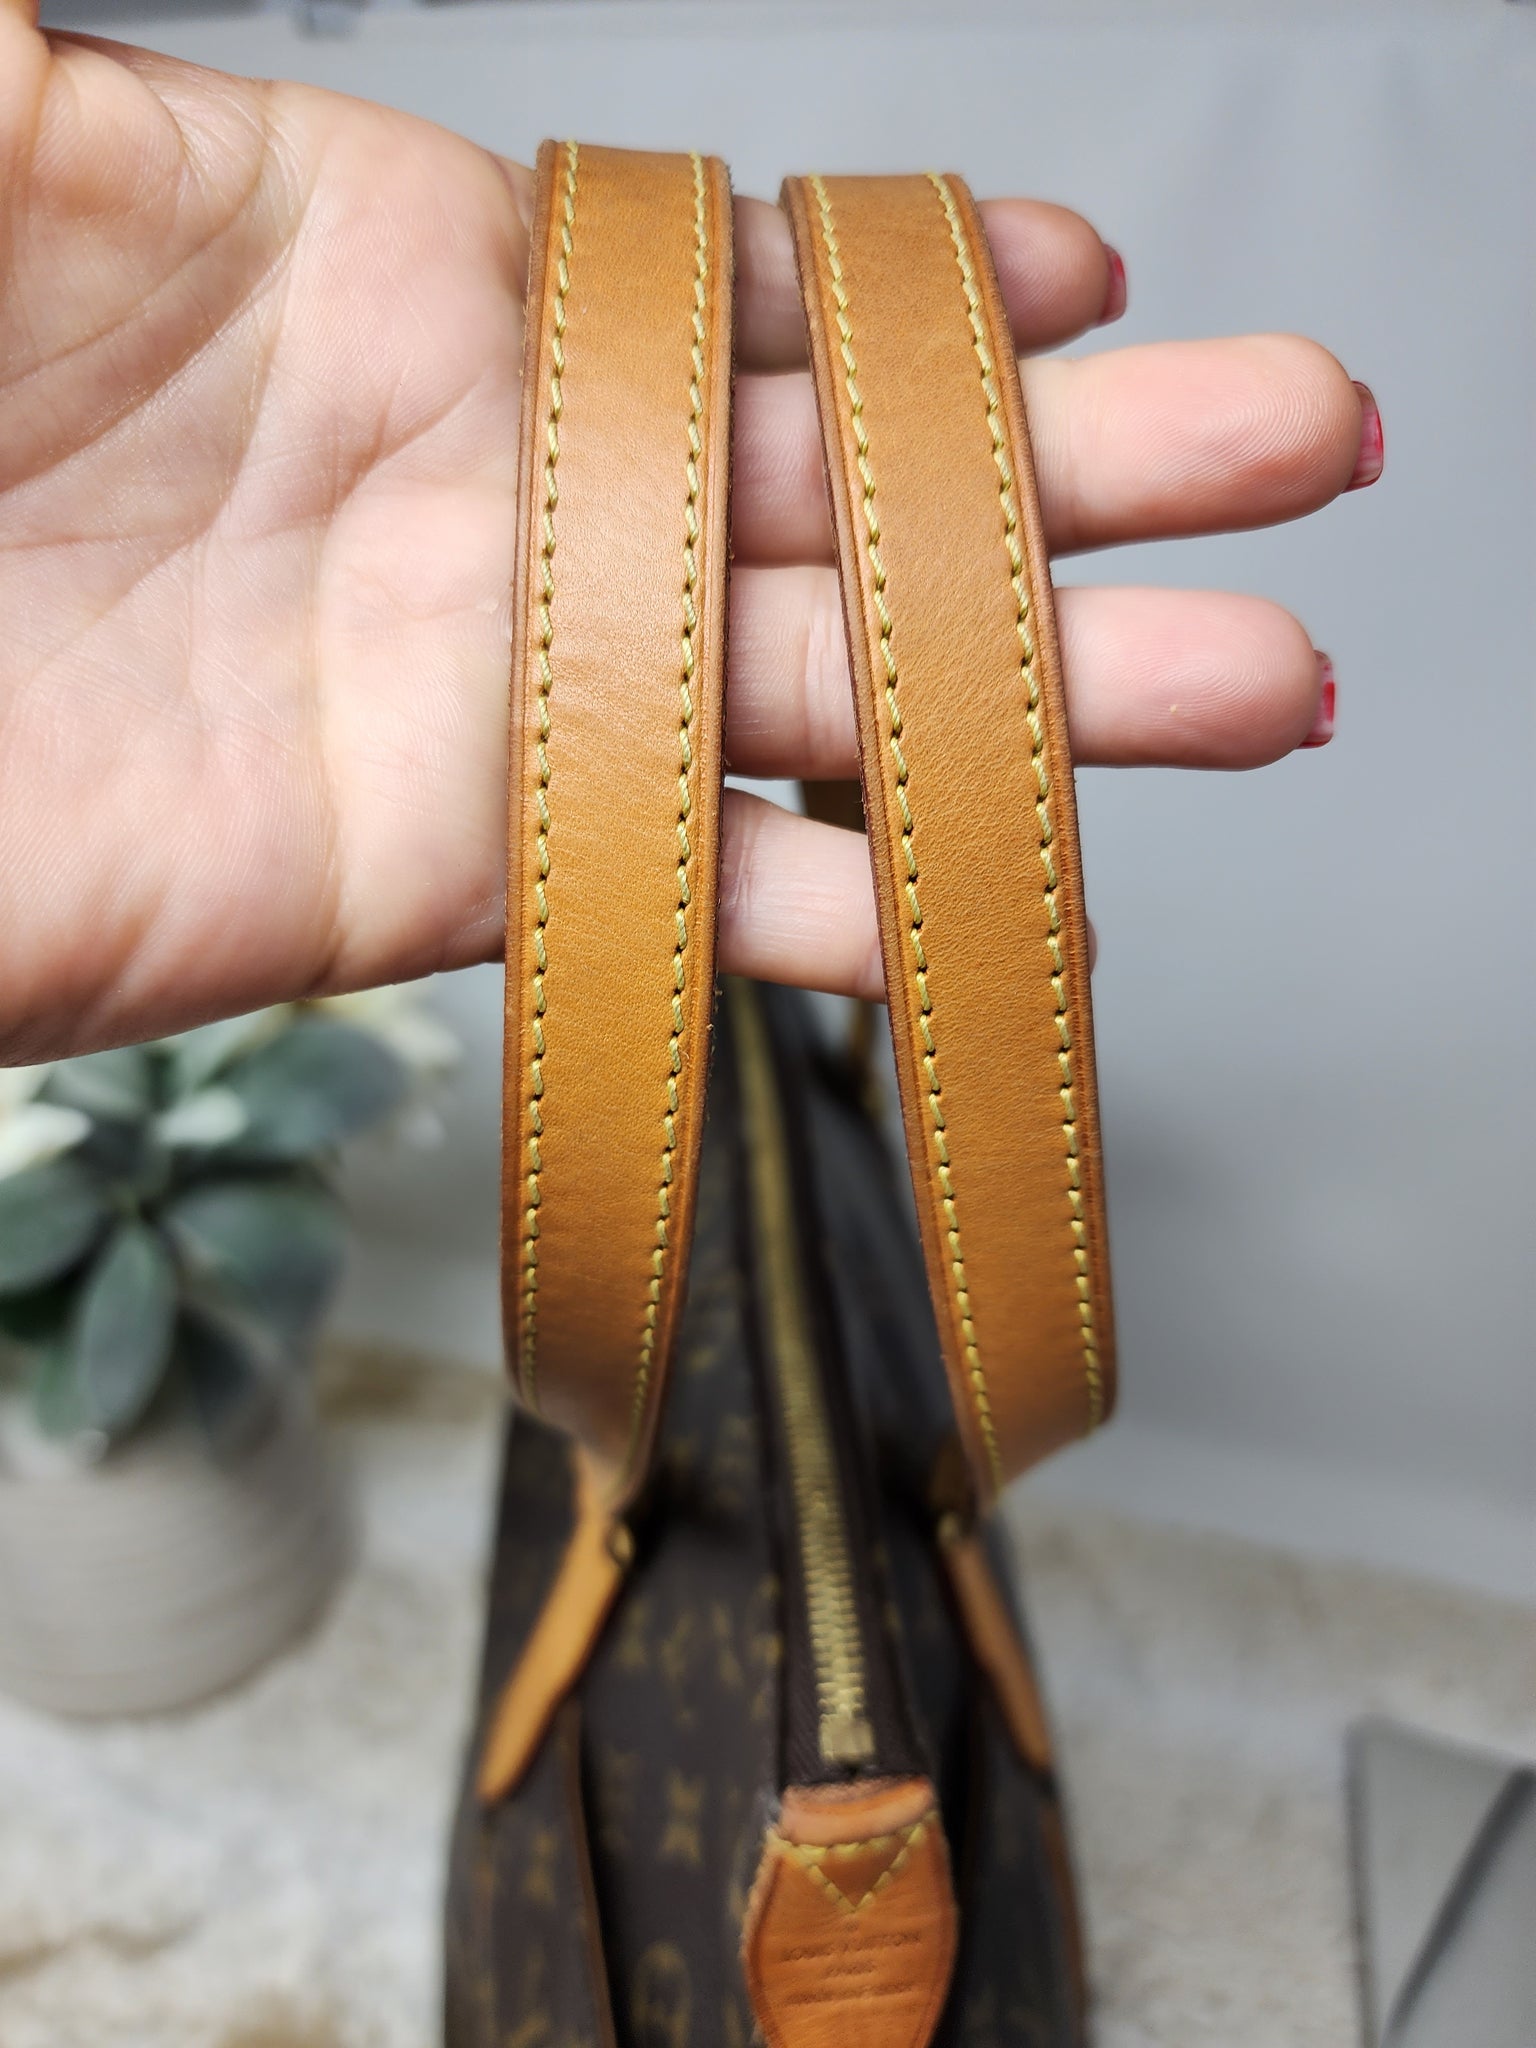 Louis Vuitton Bag Handle Cracking